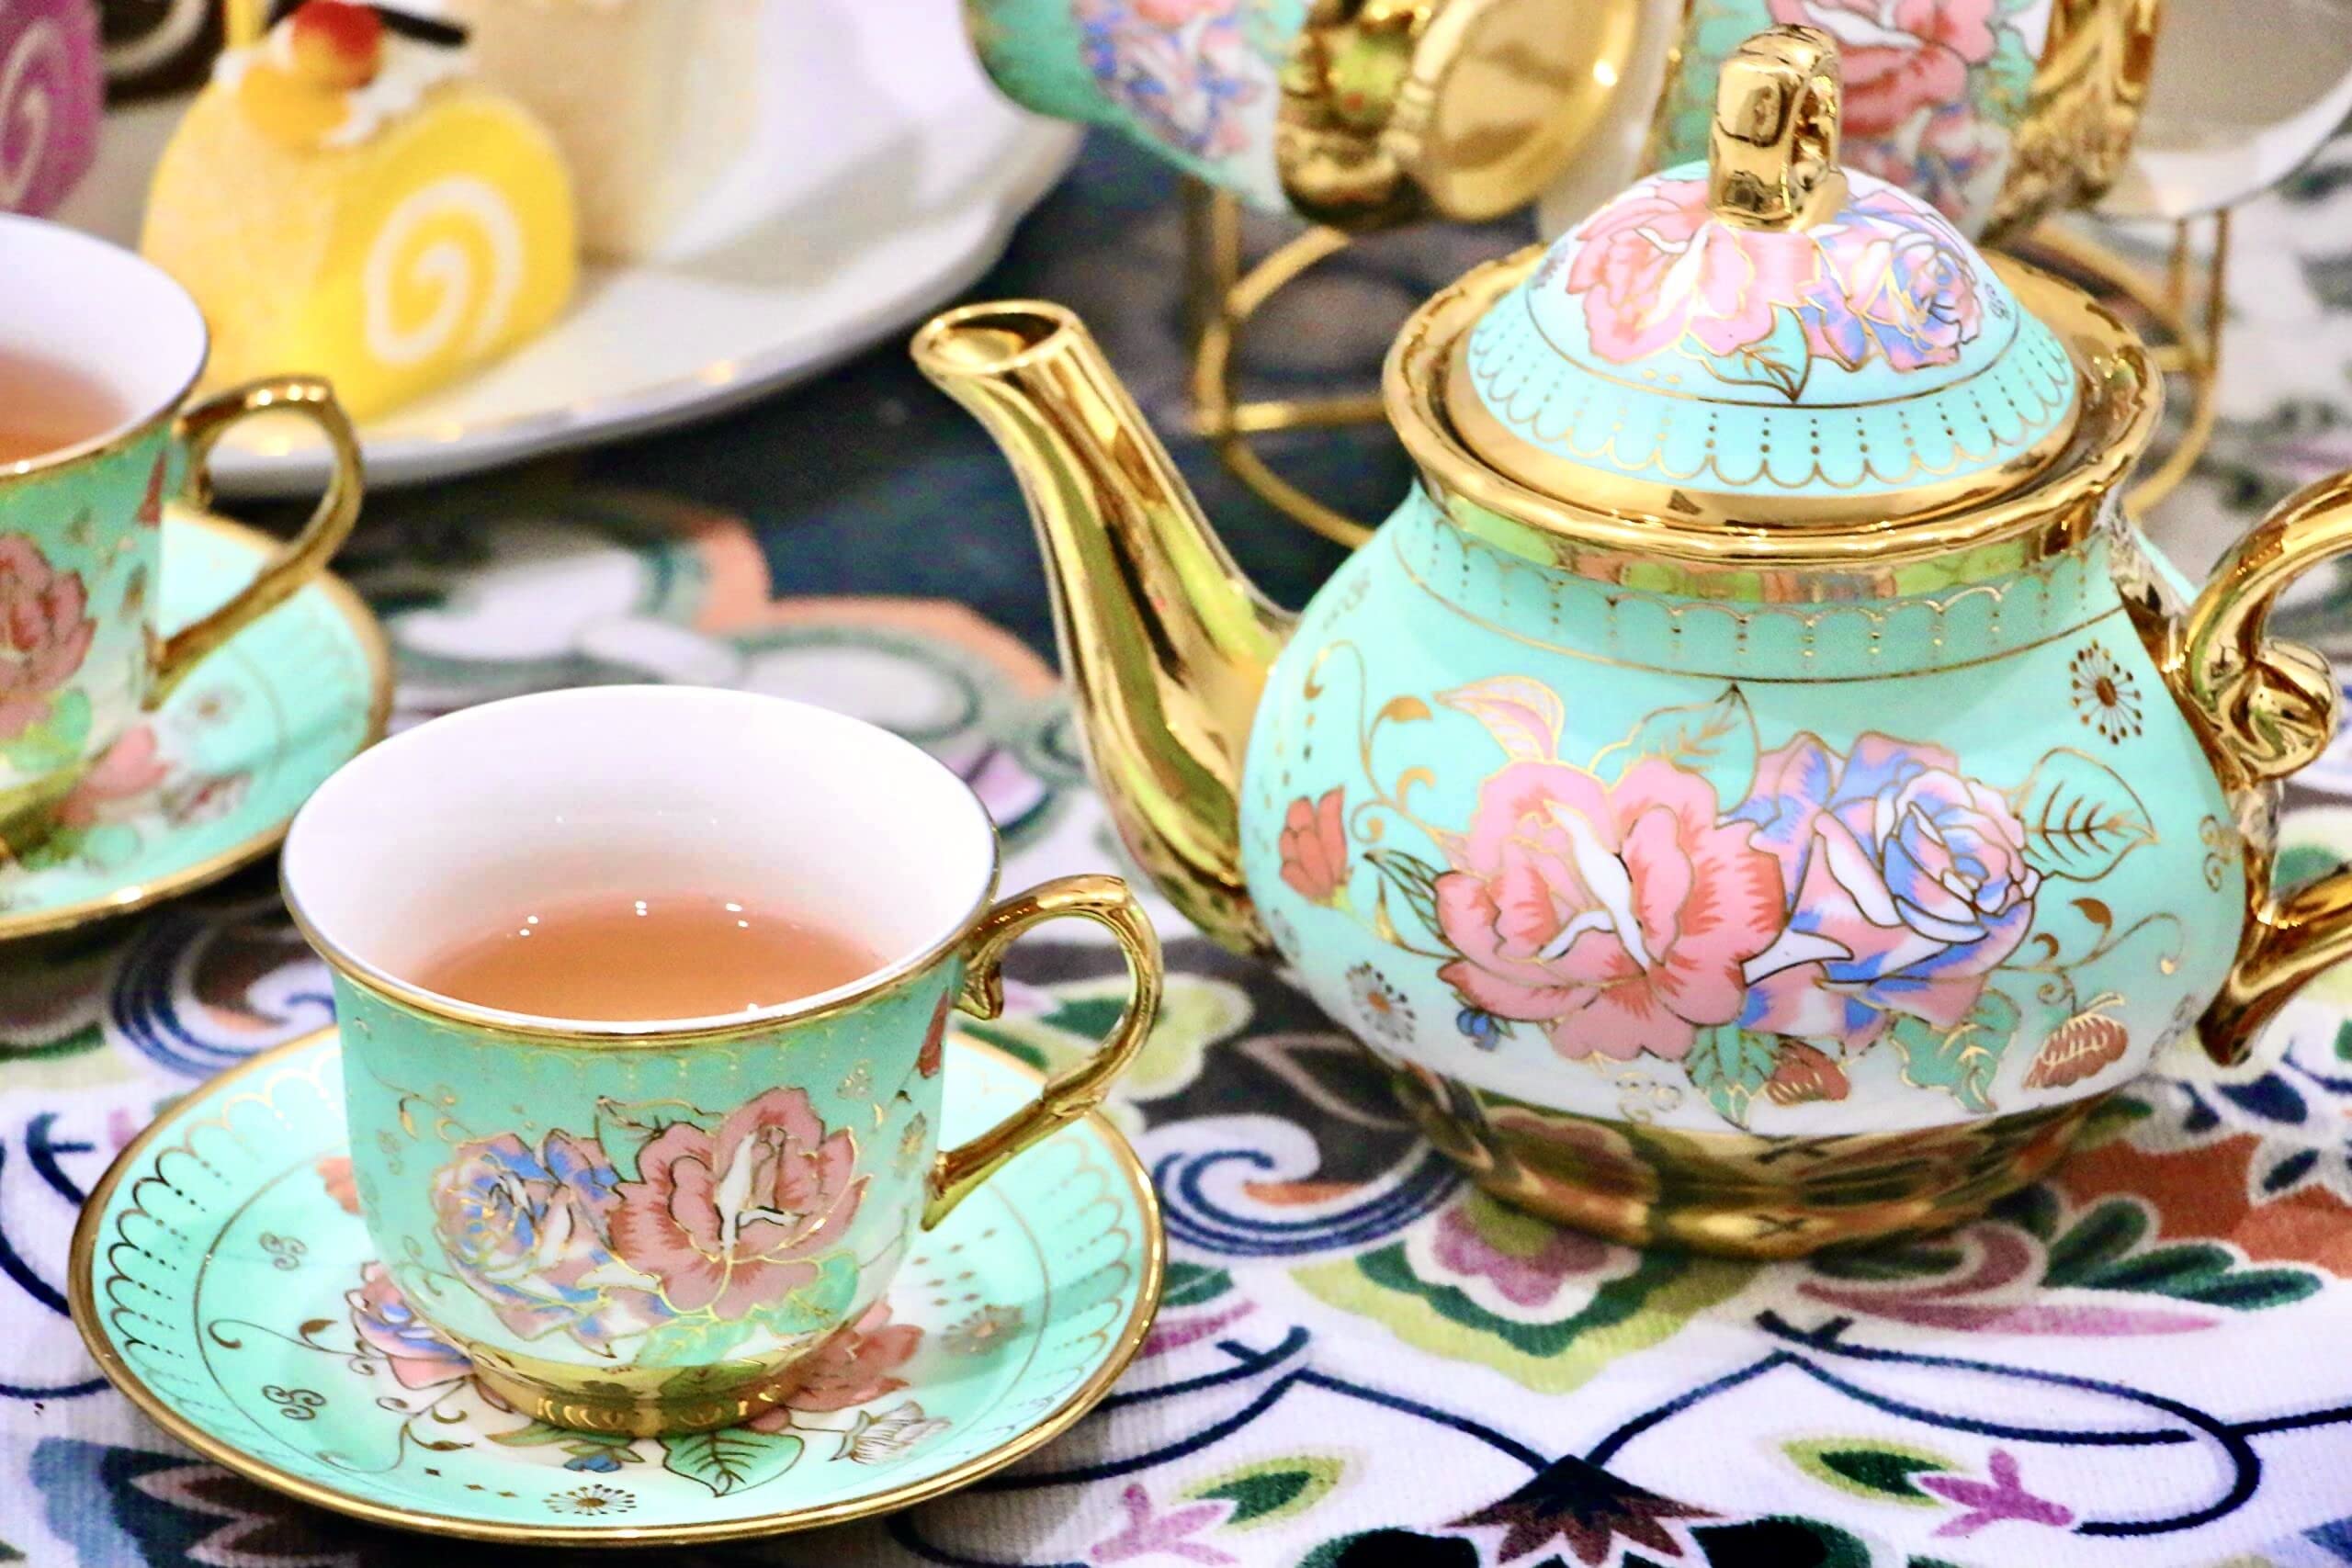 20 Pieces Porcelain Tea Set With Metal Holder, European Ceramic tea set for adults,Flower Tea Set,Tea Set For Women With Flower Painting (Large version, Green)